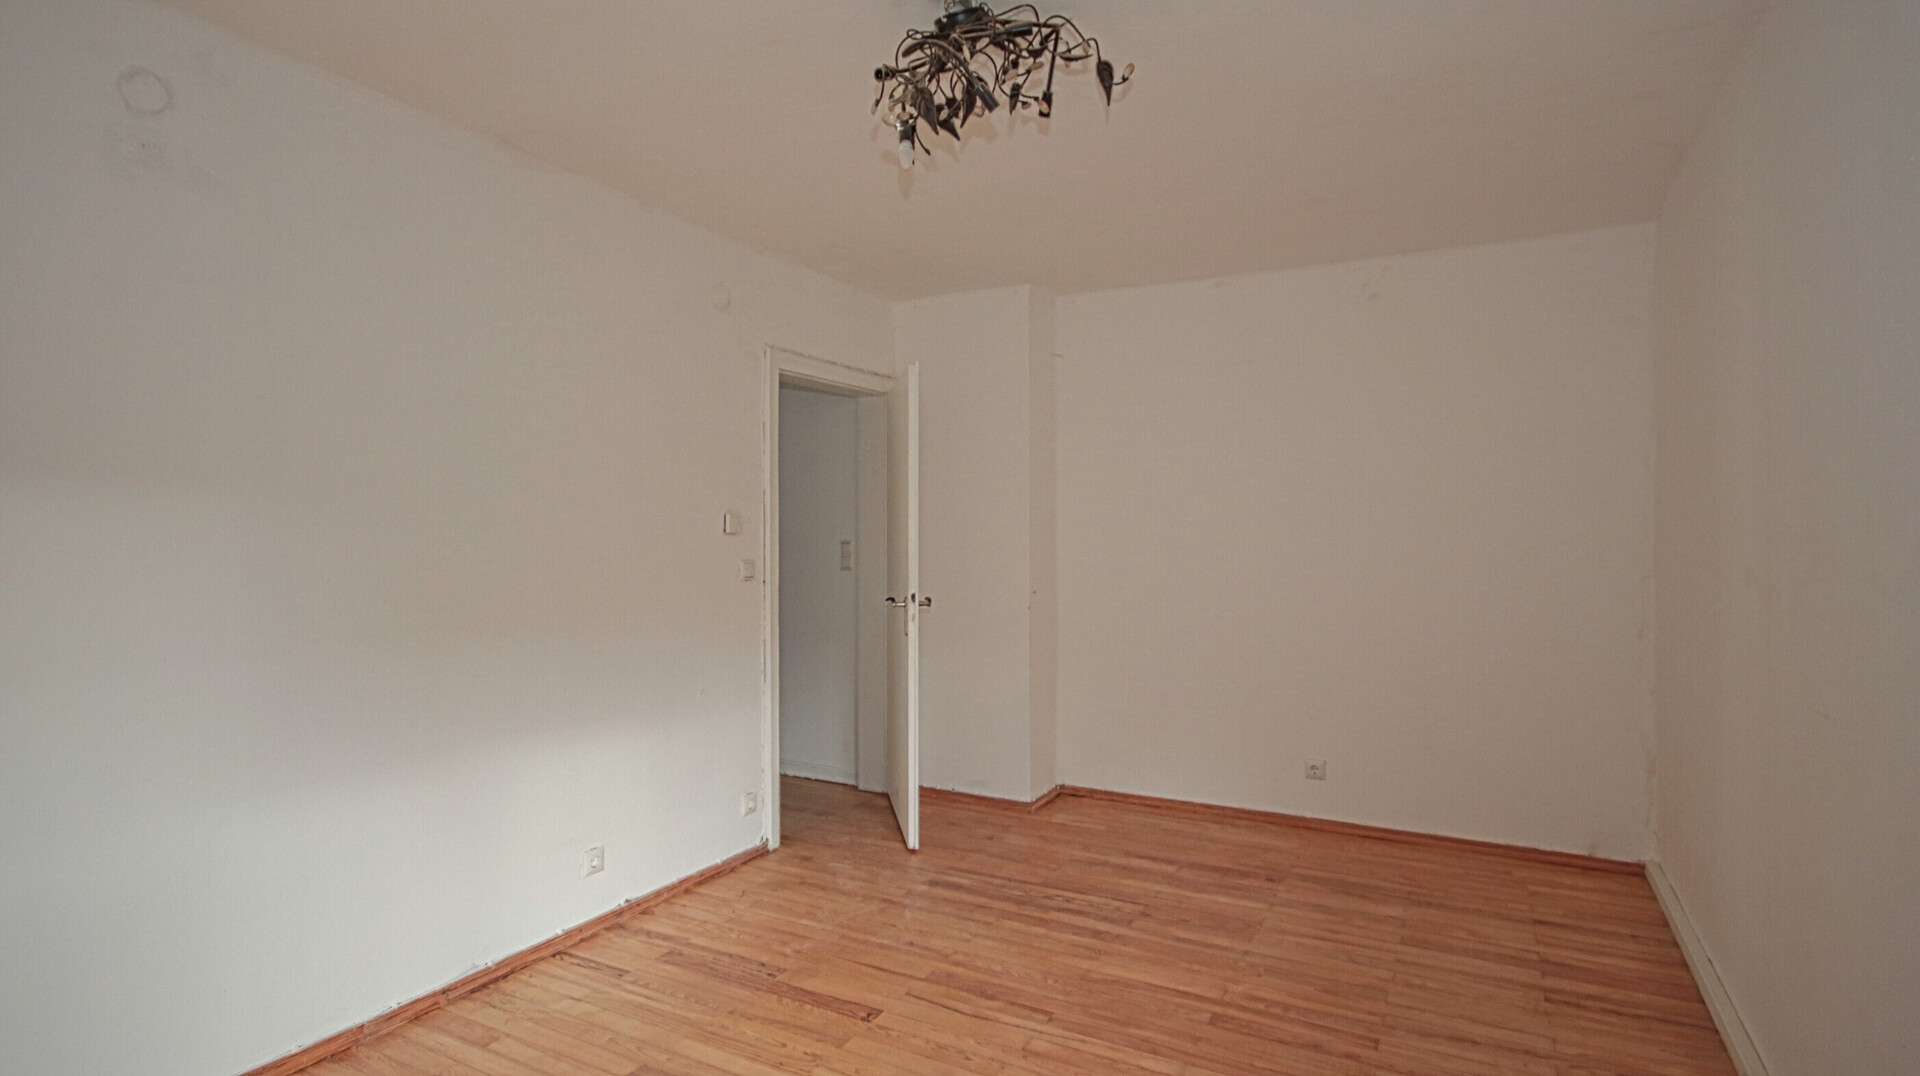 Haus zum Mieten in Raumbach 700,00 € 114 m²